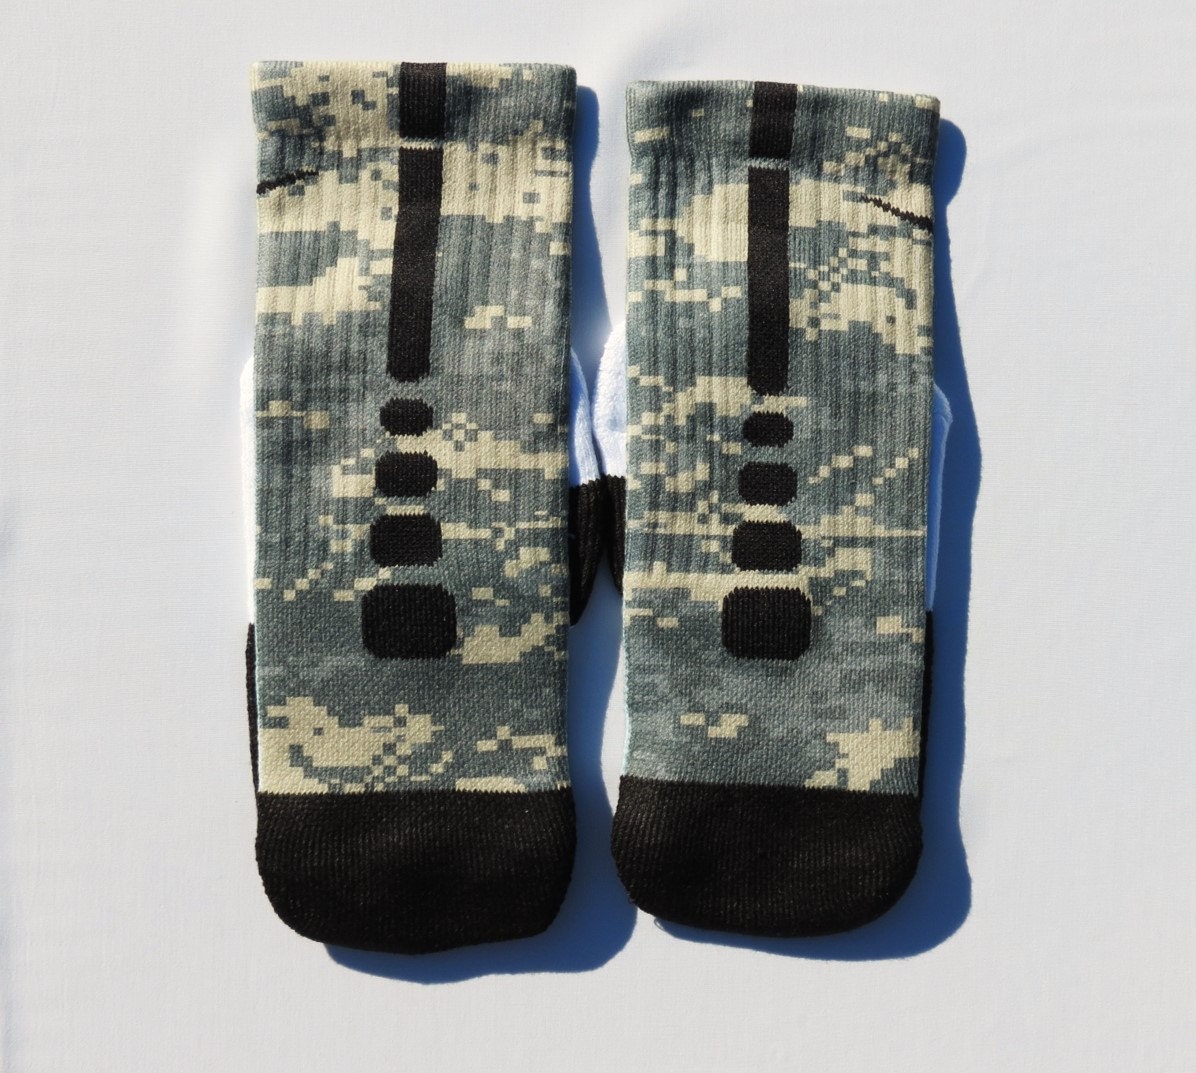 Digital Camo Nike Elite socks by BlastOffApparel on Etsy